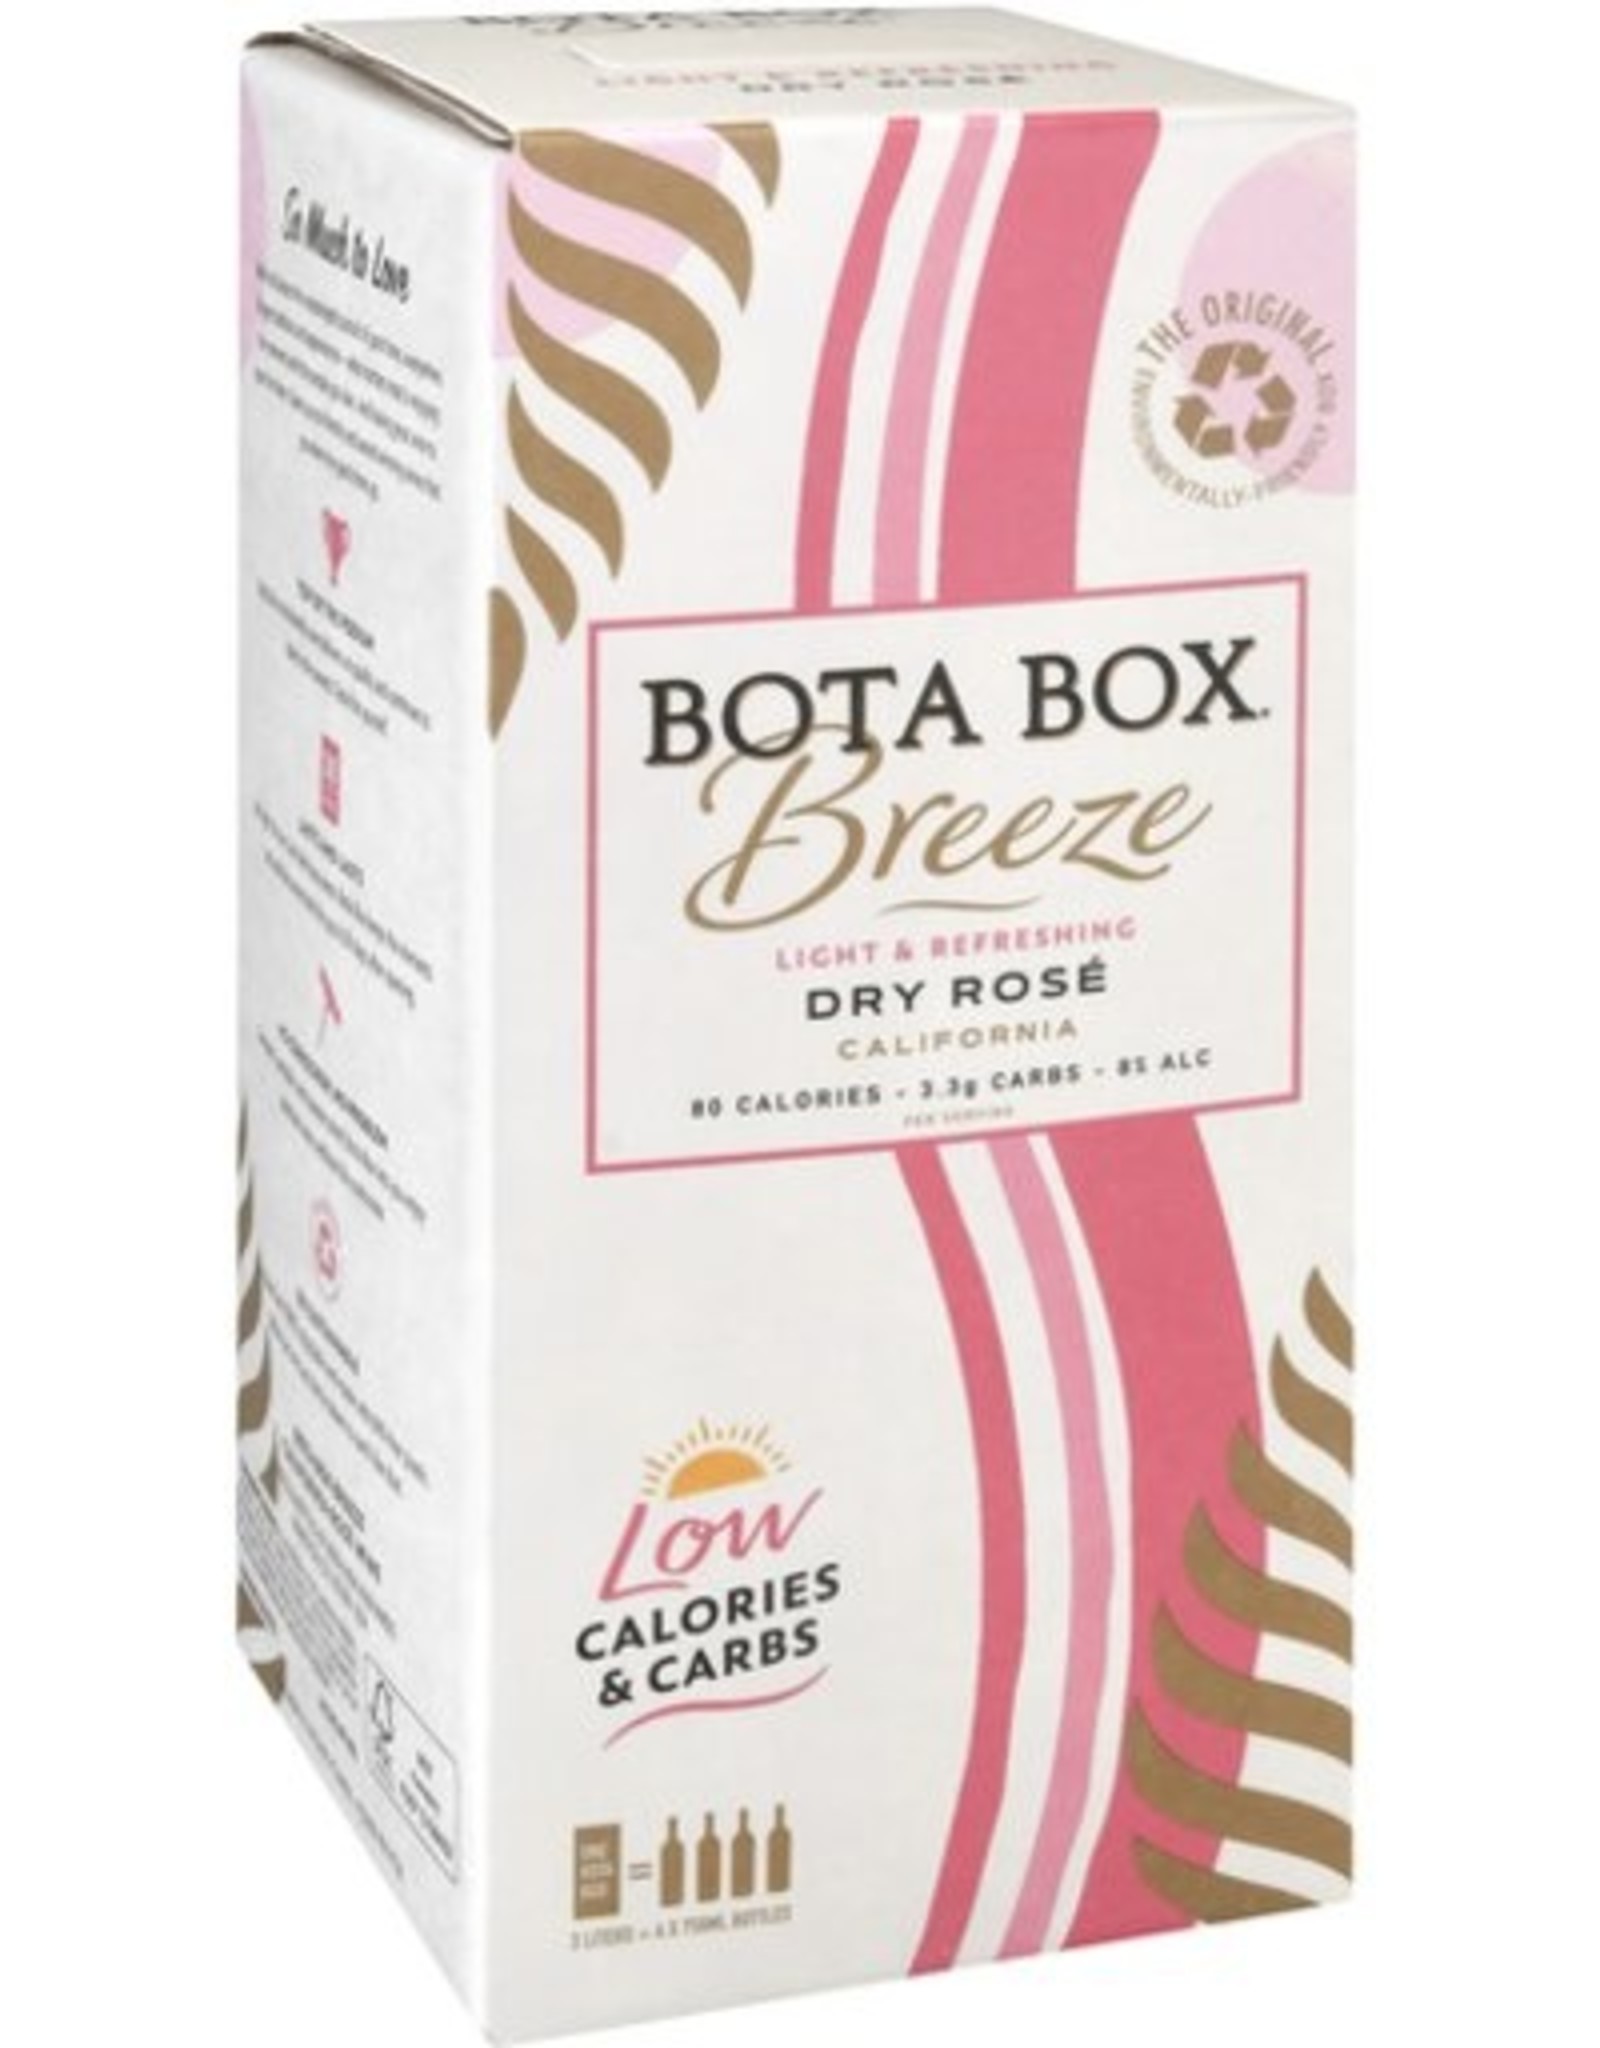 Bota Box Breeze Dry Rose